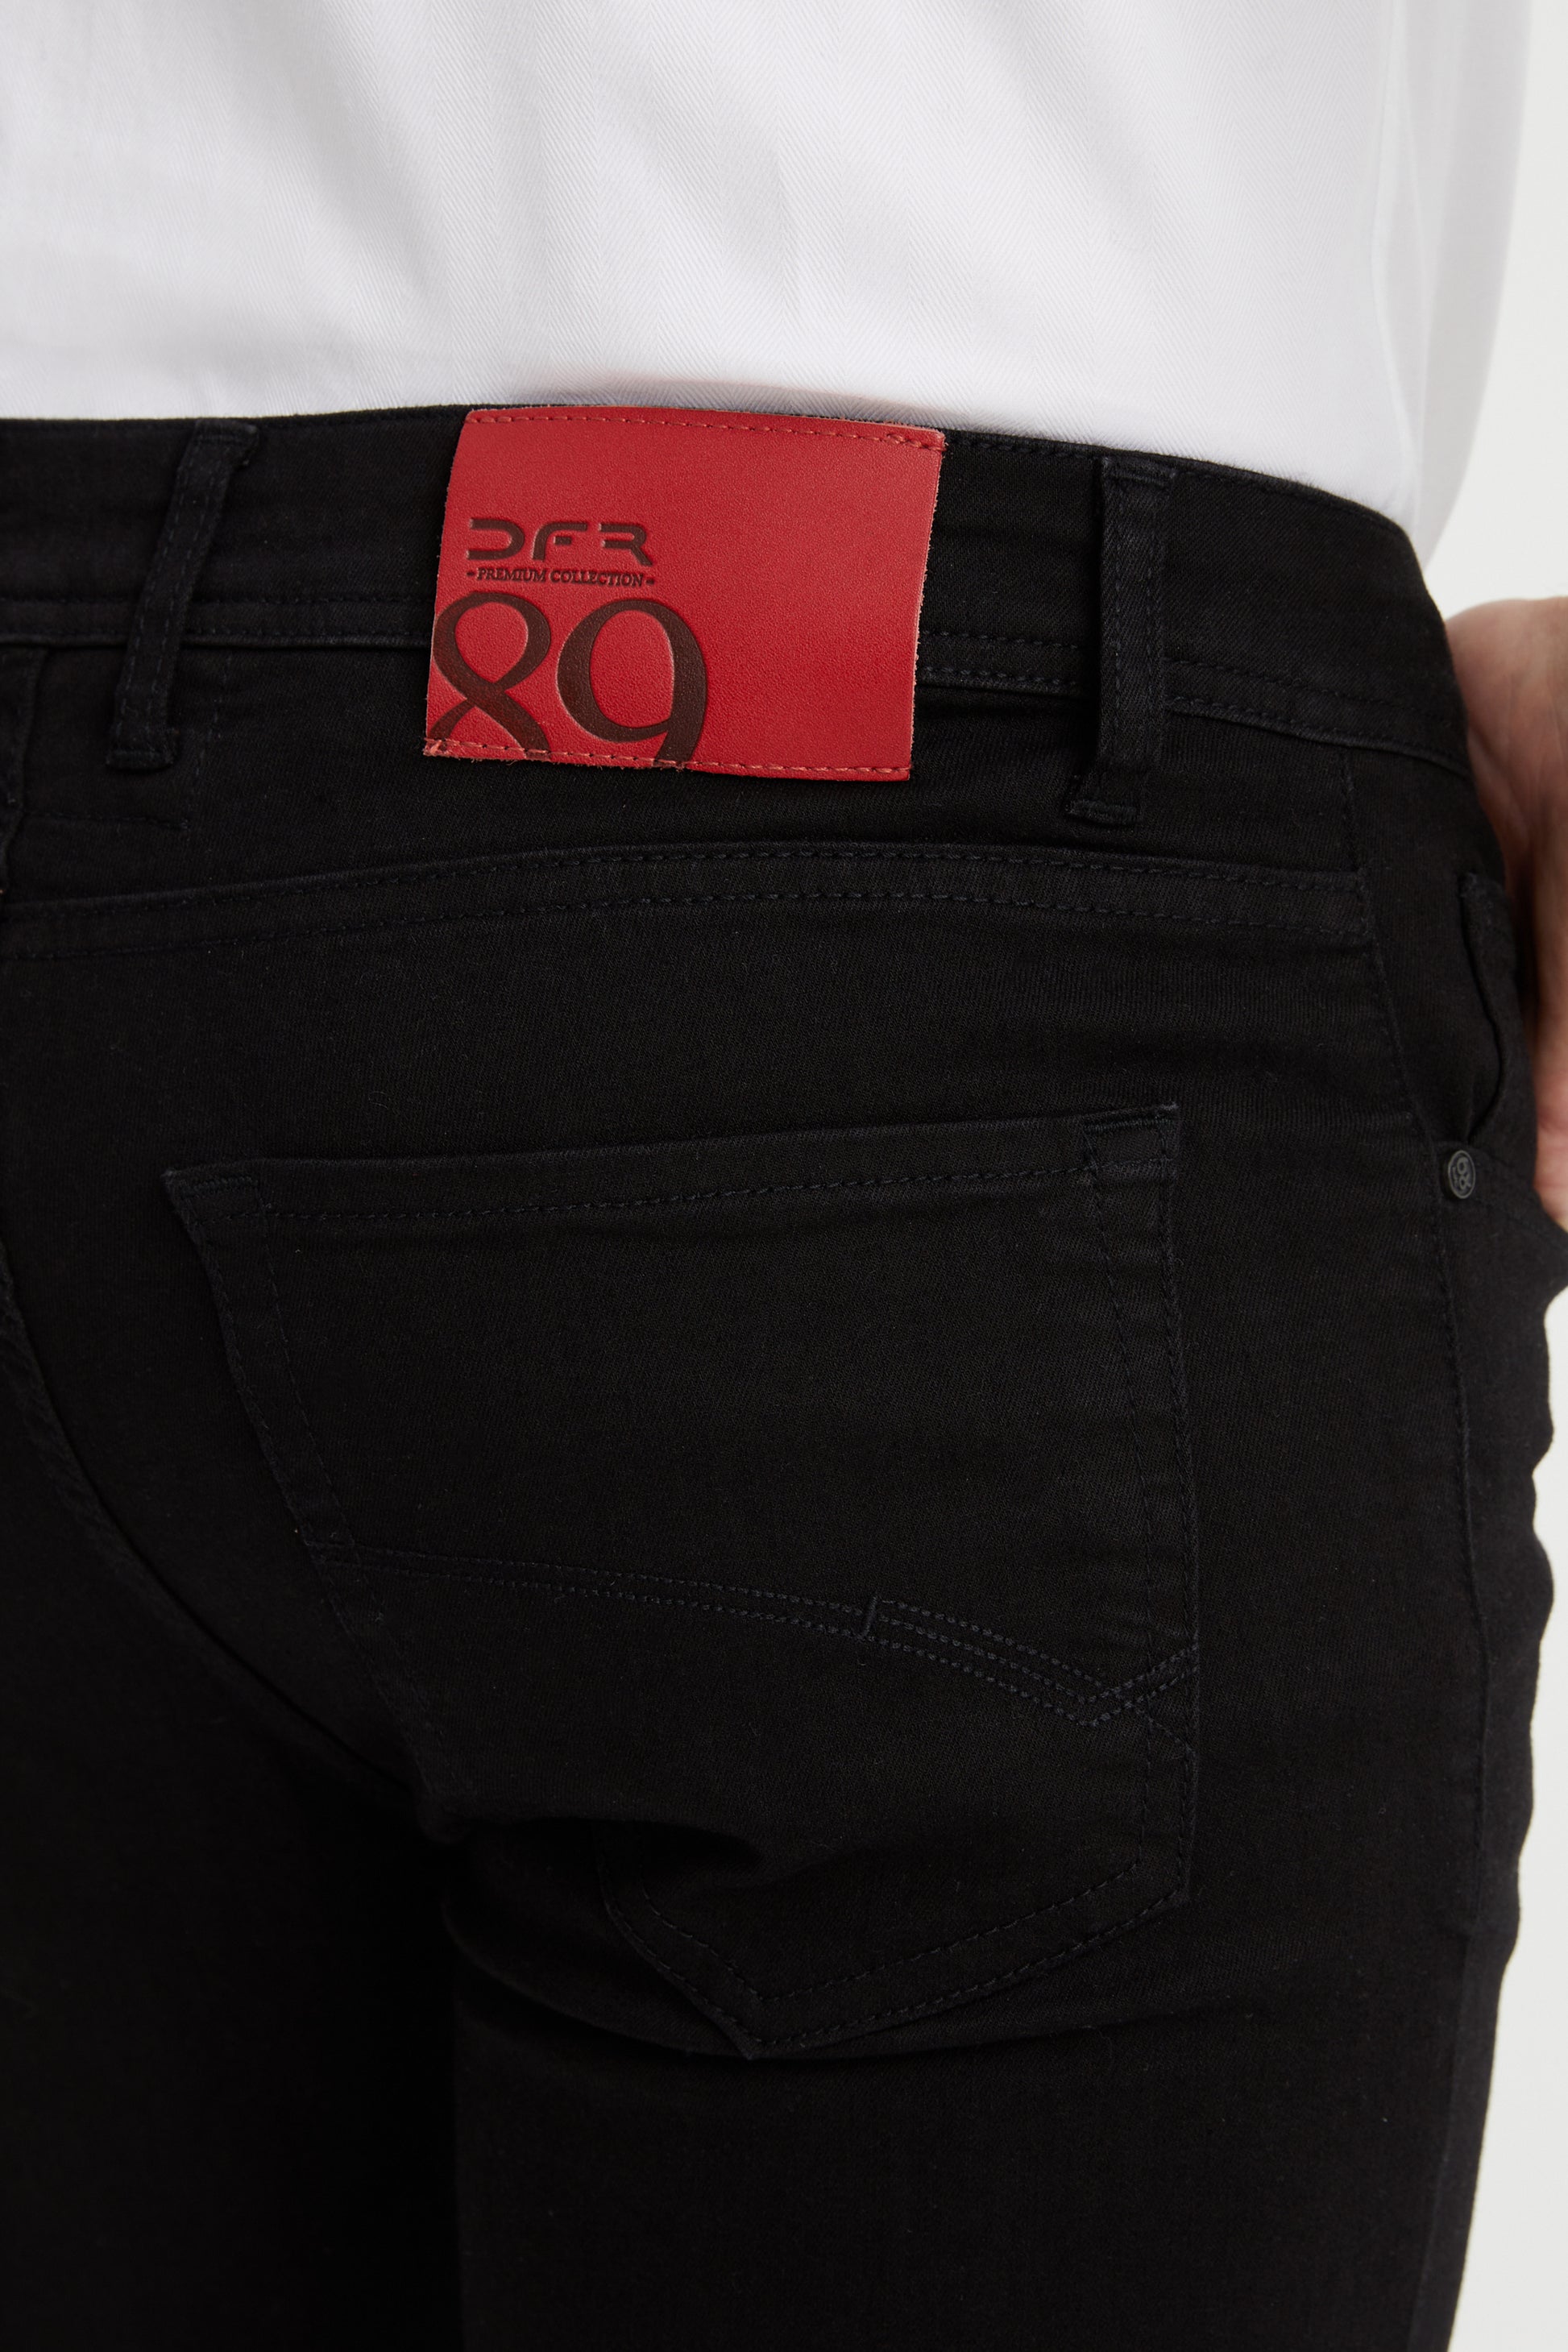 DFR89 Raven jeans, black, premium denim. Built for style and comfort.